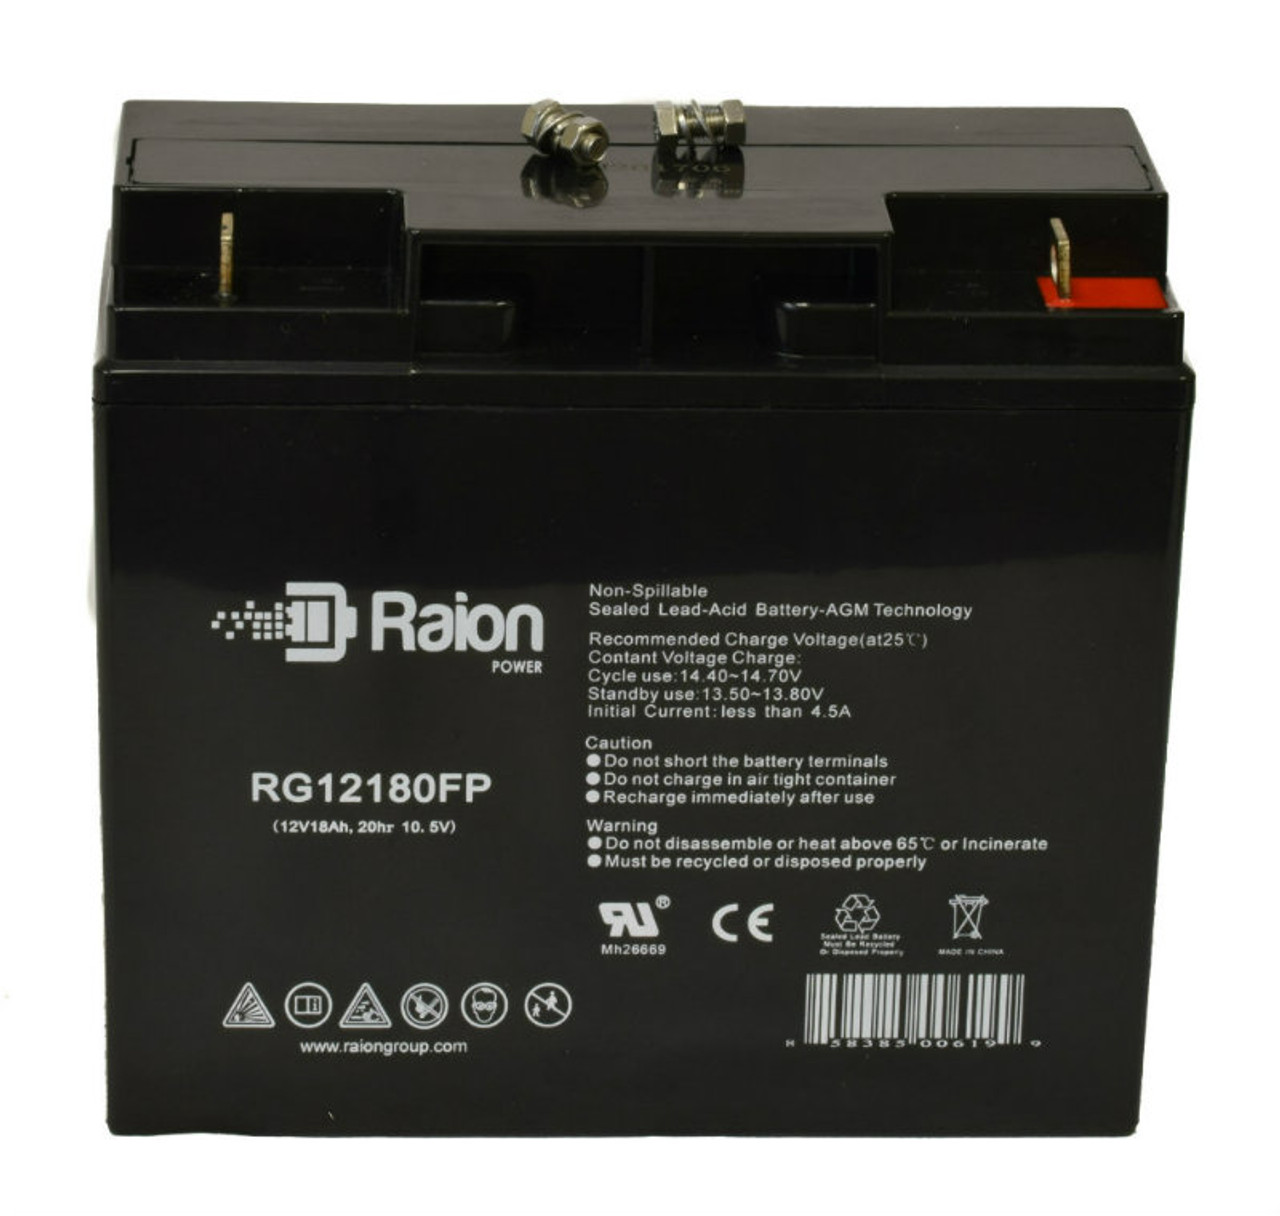 Raion Power RG12180FP 12V 18Ah Lead Acid Battery for Friendly Robotics Robomower RL800 Lawn Mower